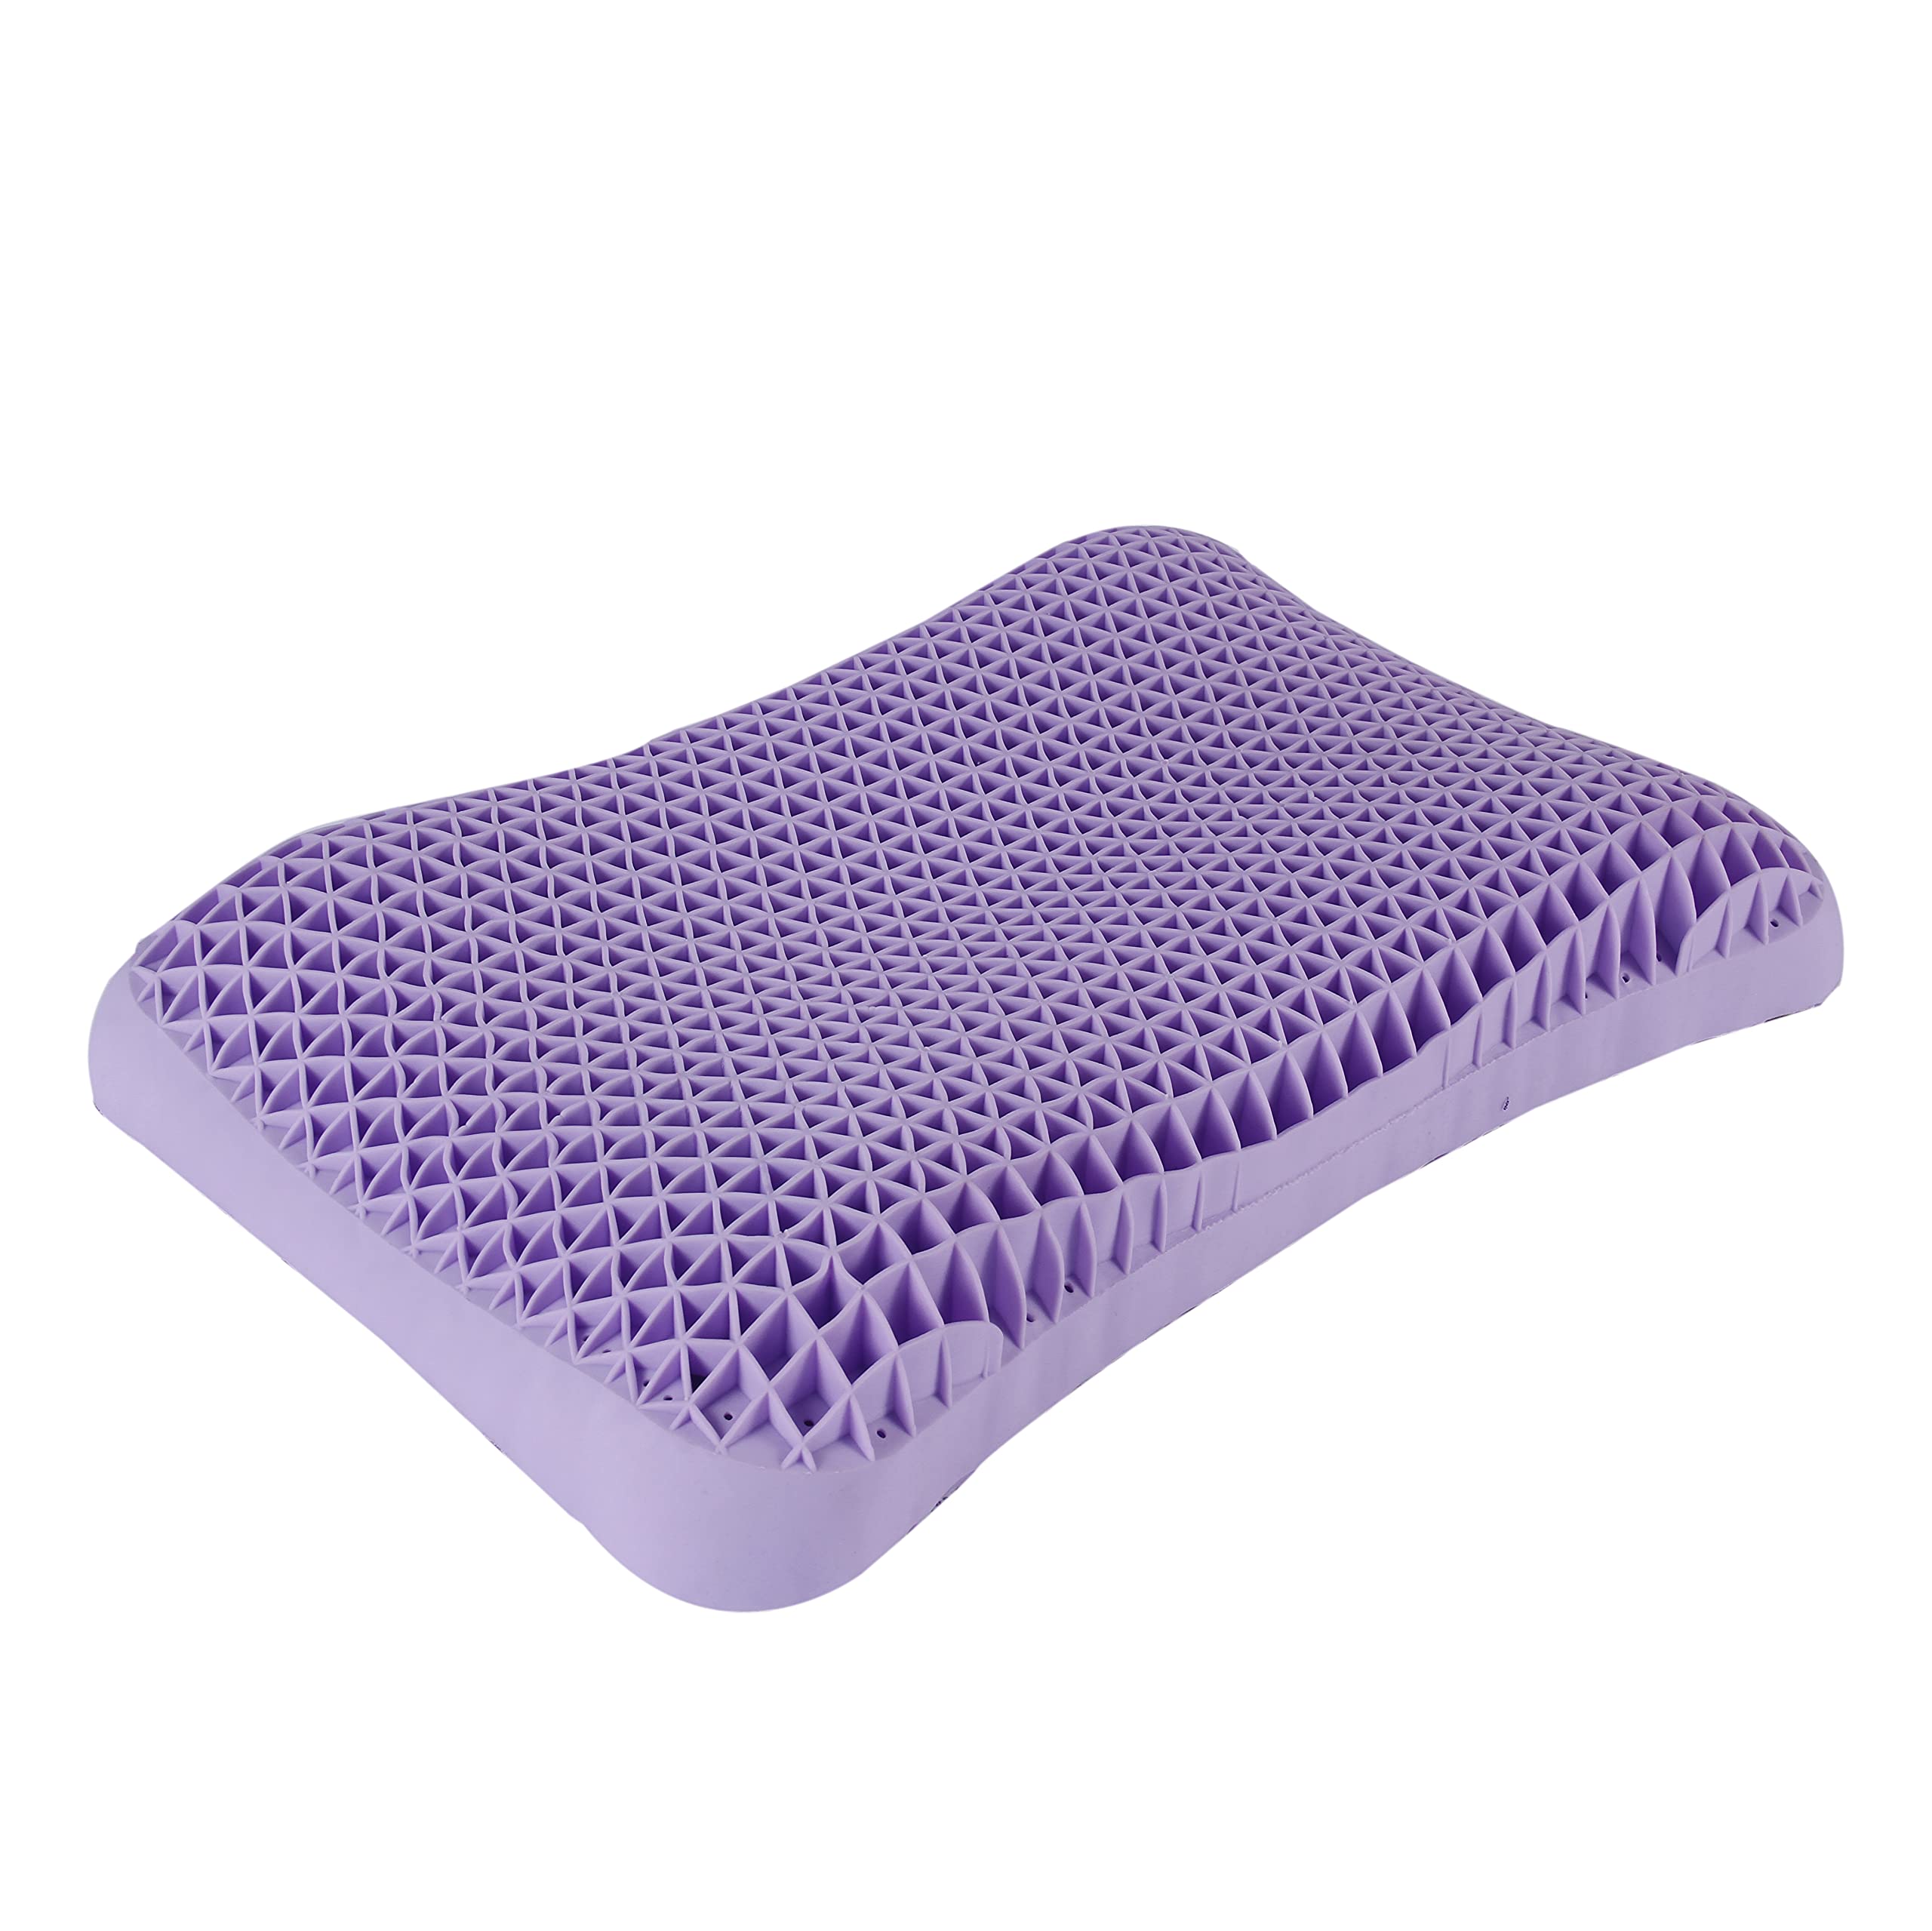 Berklan Purple Kid Pillow 100% Elastic Grid Ergonomic Neck Shoulder Supportive Cervical Pillow for Kids with Breathable Pillow Cover